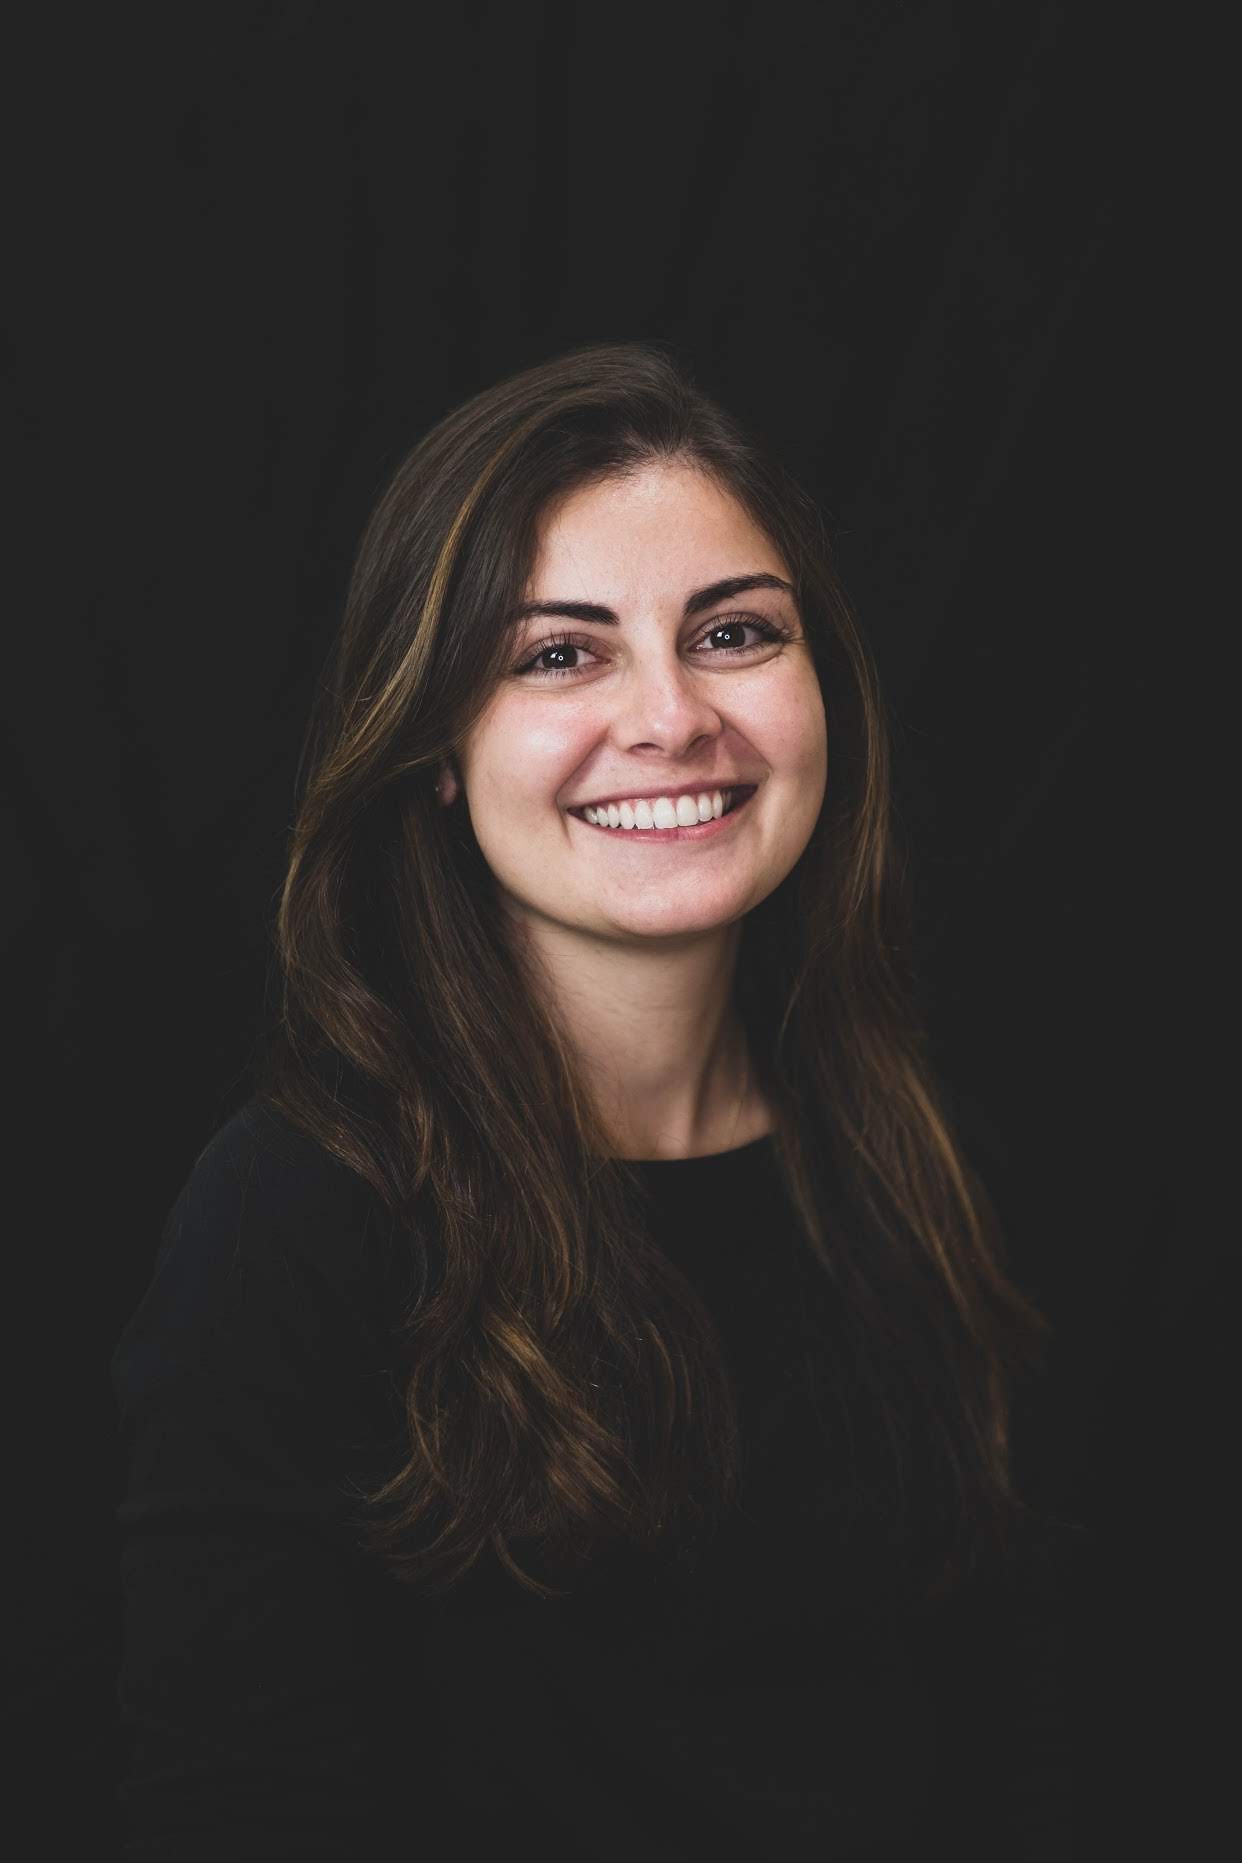 Student Spotlight: Meet Melissa Marietto!